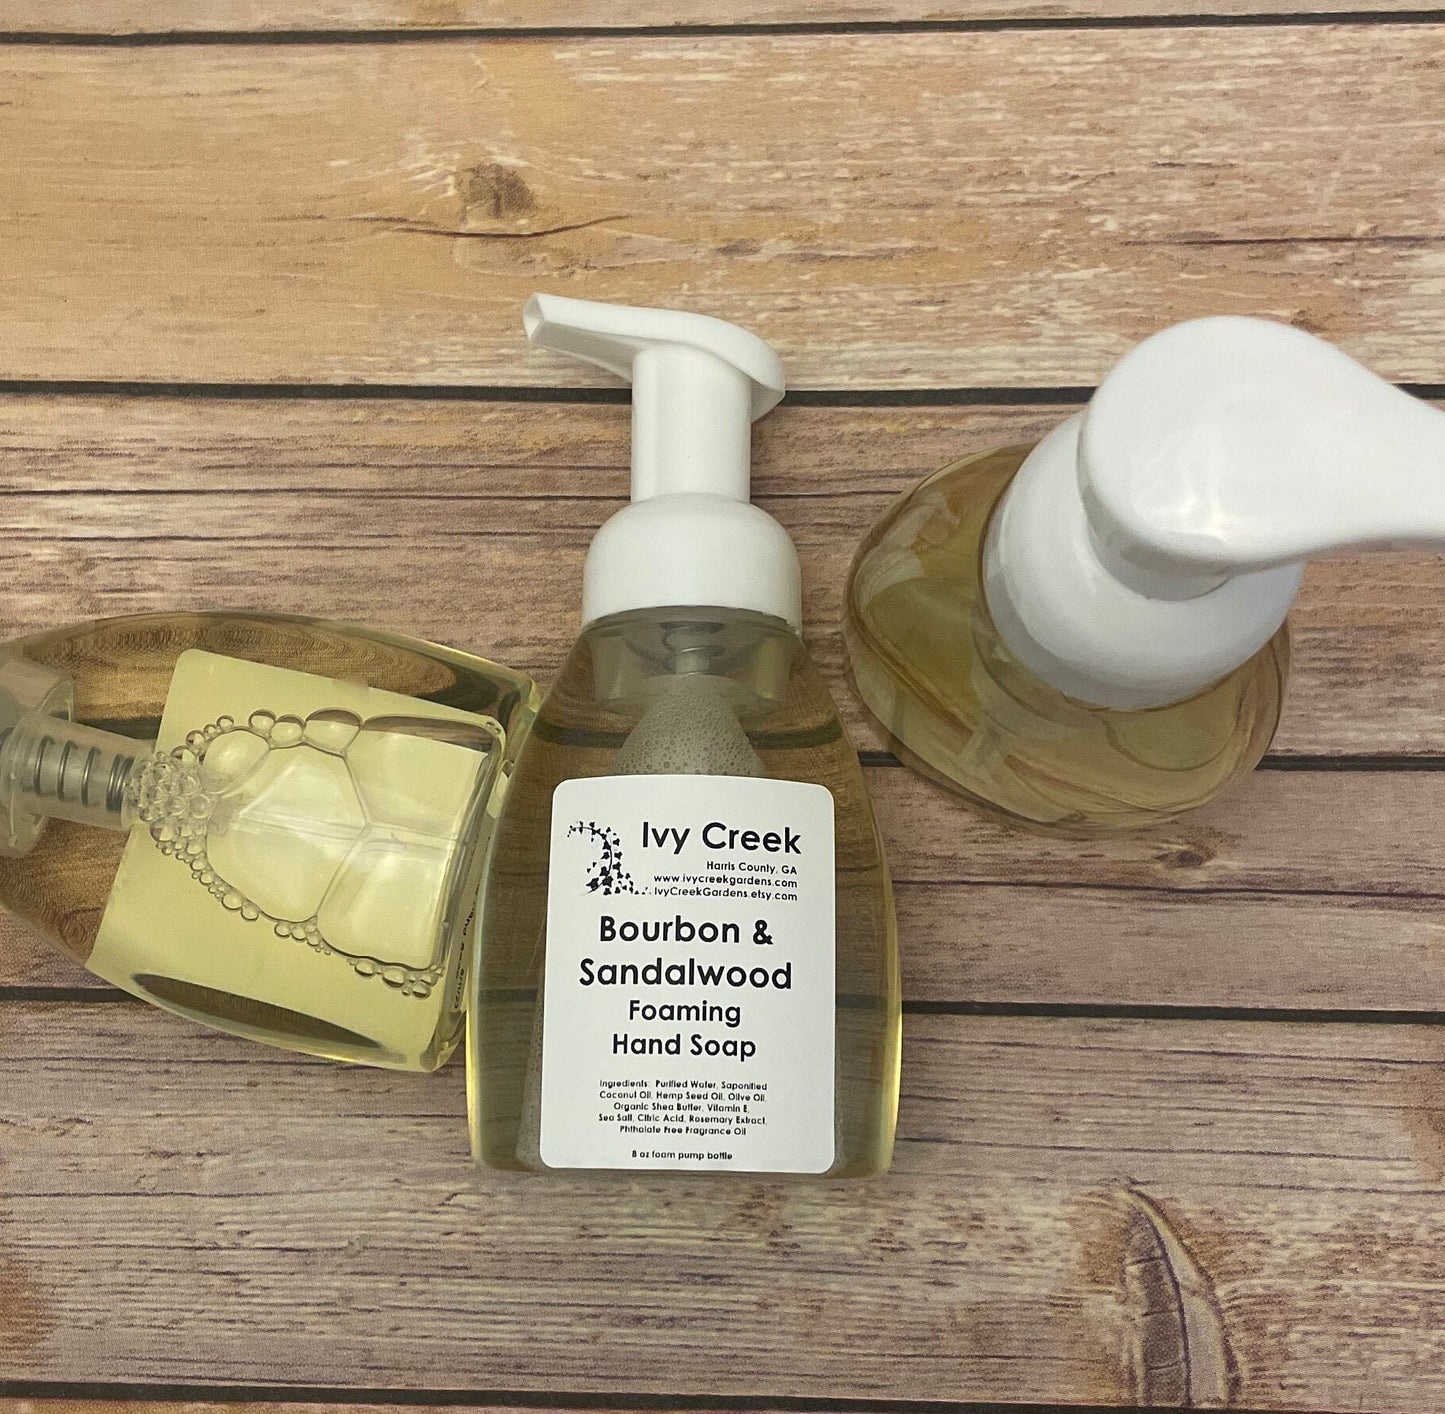 Ivy Creek Bourbon & Sandalwood Foaming Hand Soap | Luxurious Scented Cleanser | Vegan Skin Care | 8 oz Pump Bottle